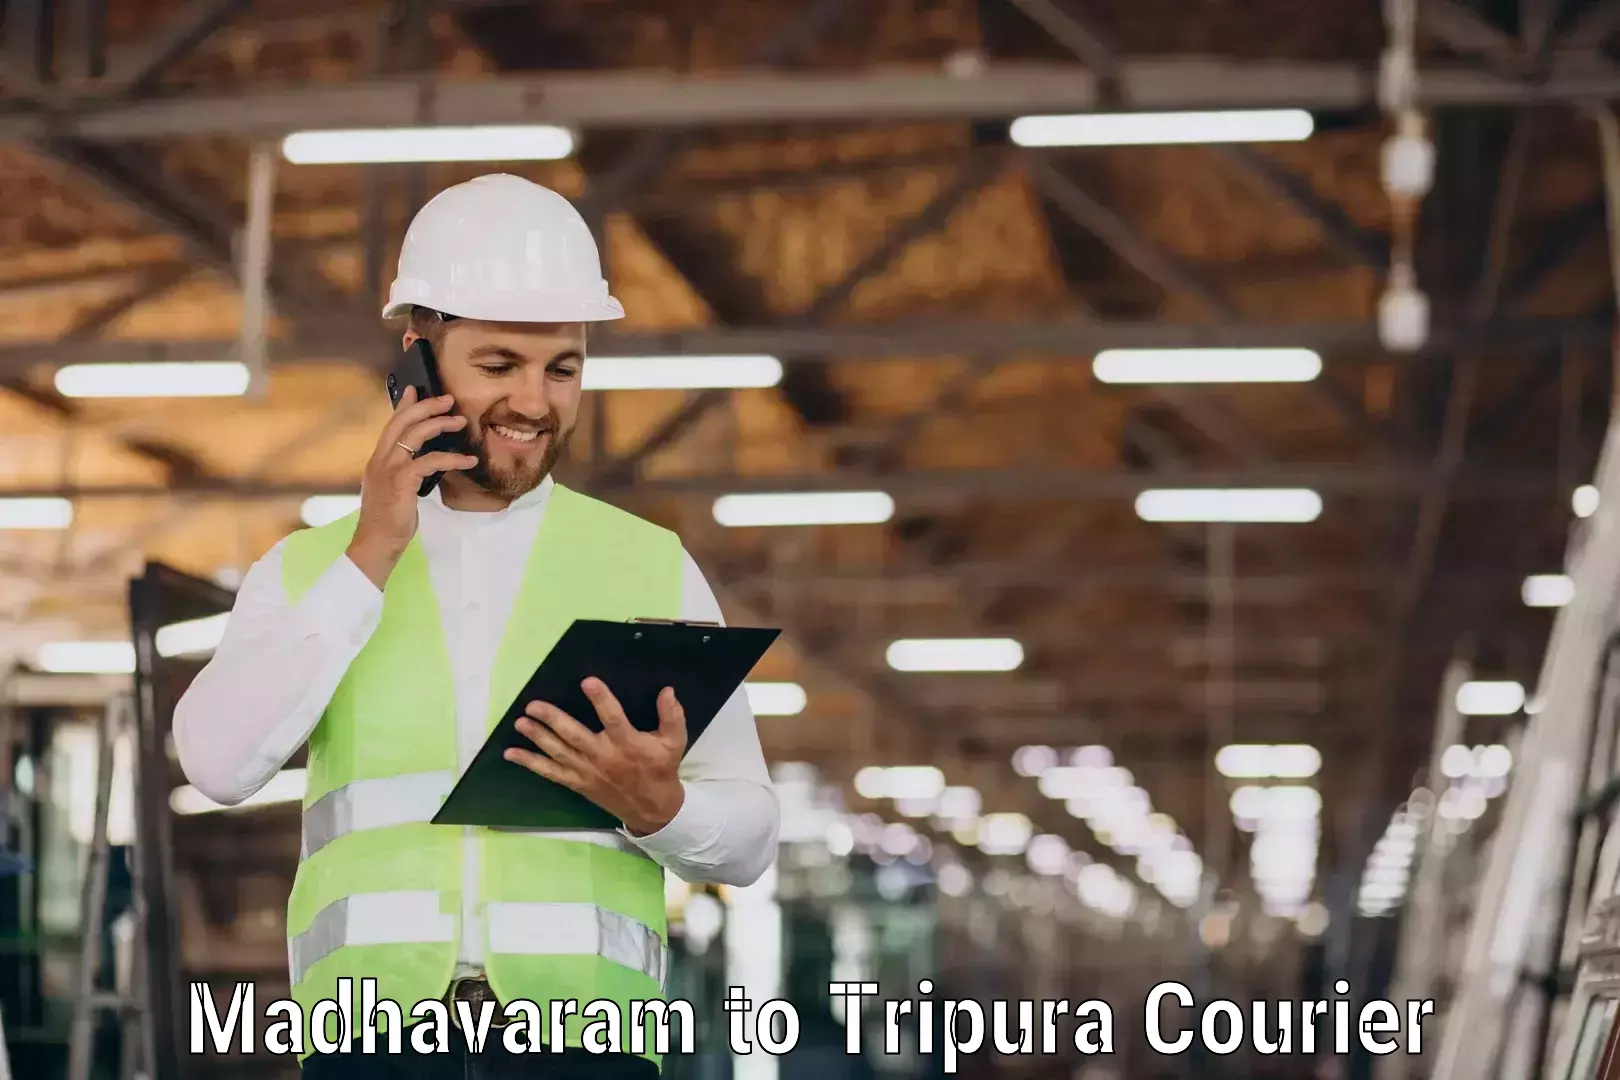 Courier service comparison Madhavaram to Udaipur Tripura